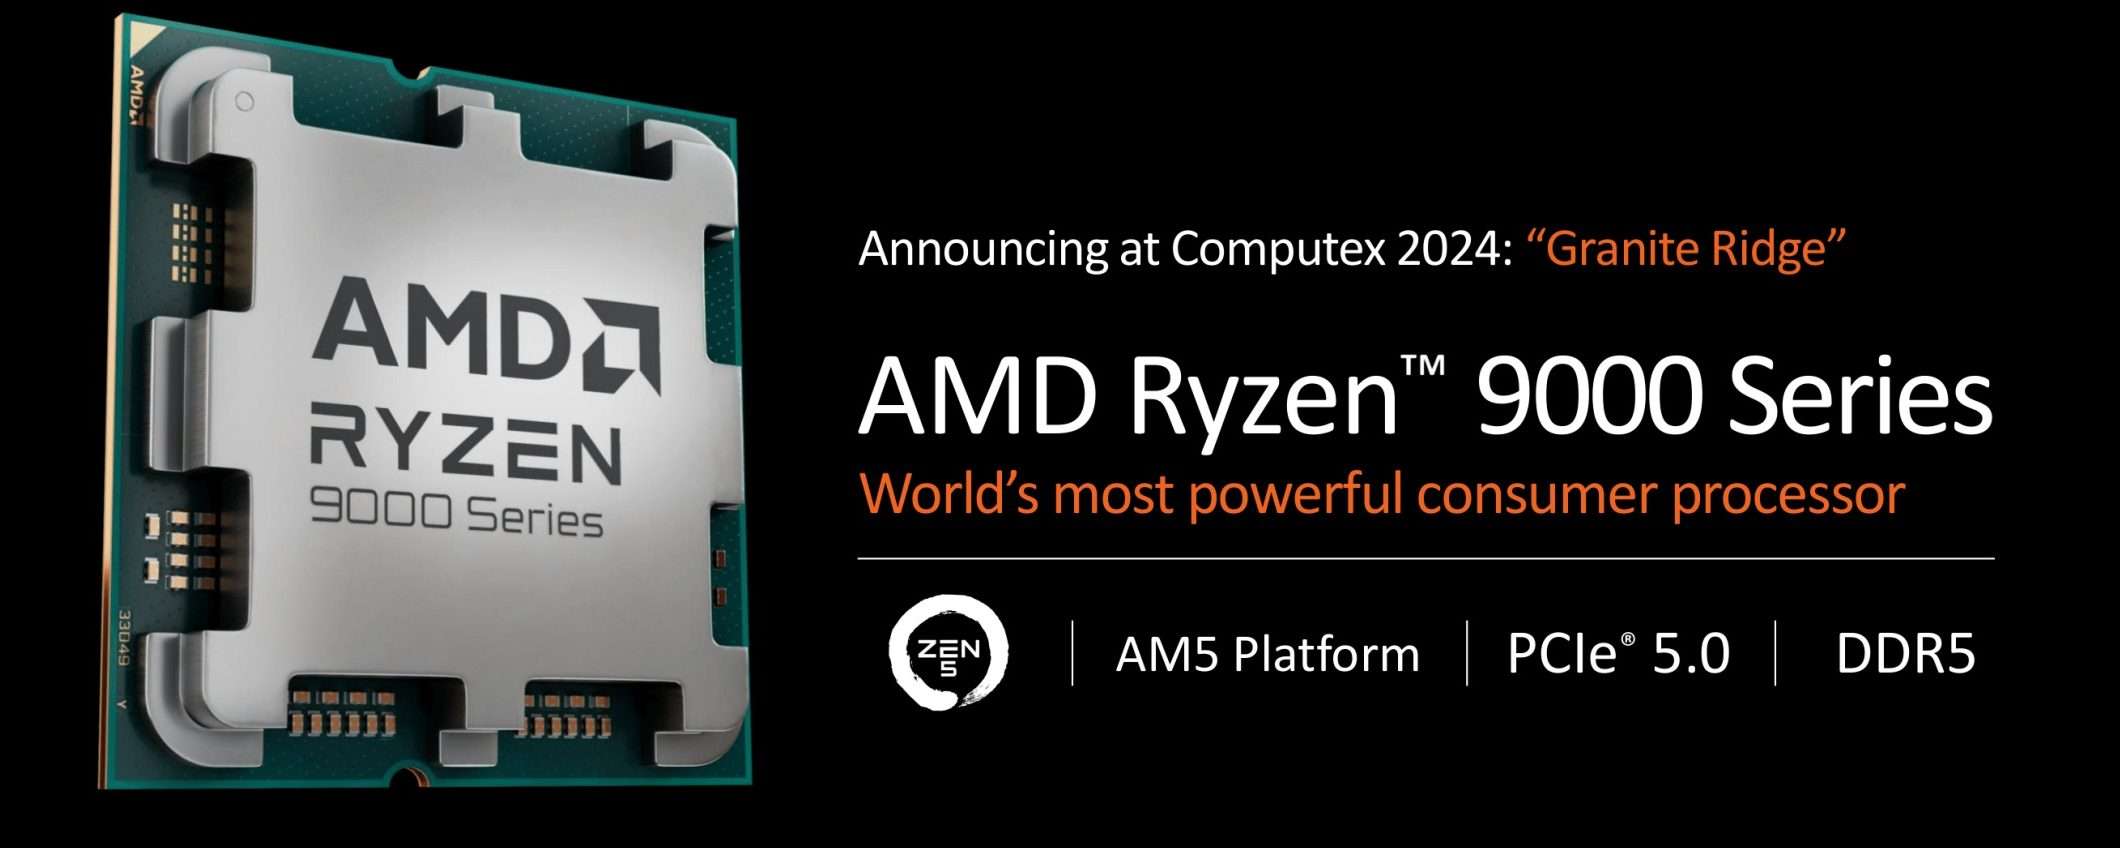 AMD Ryzen 9000: quattro nuove CPU per desktop